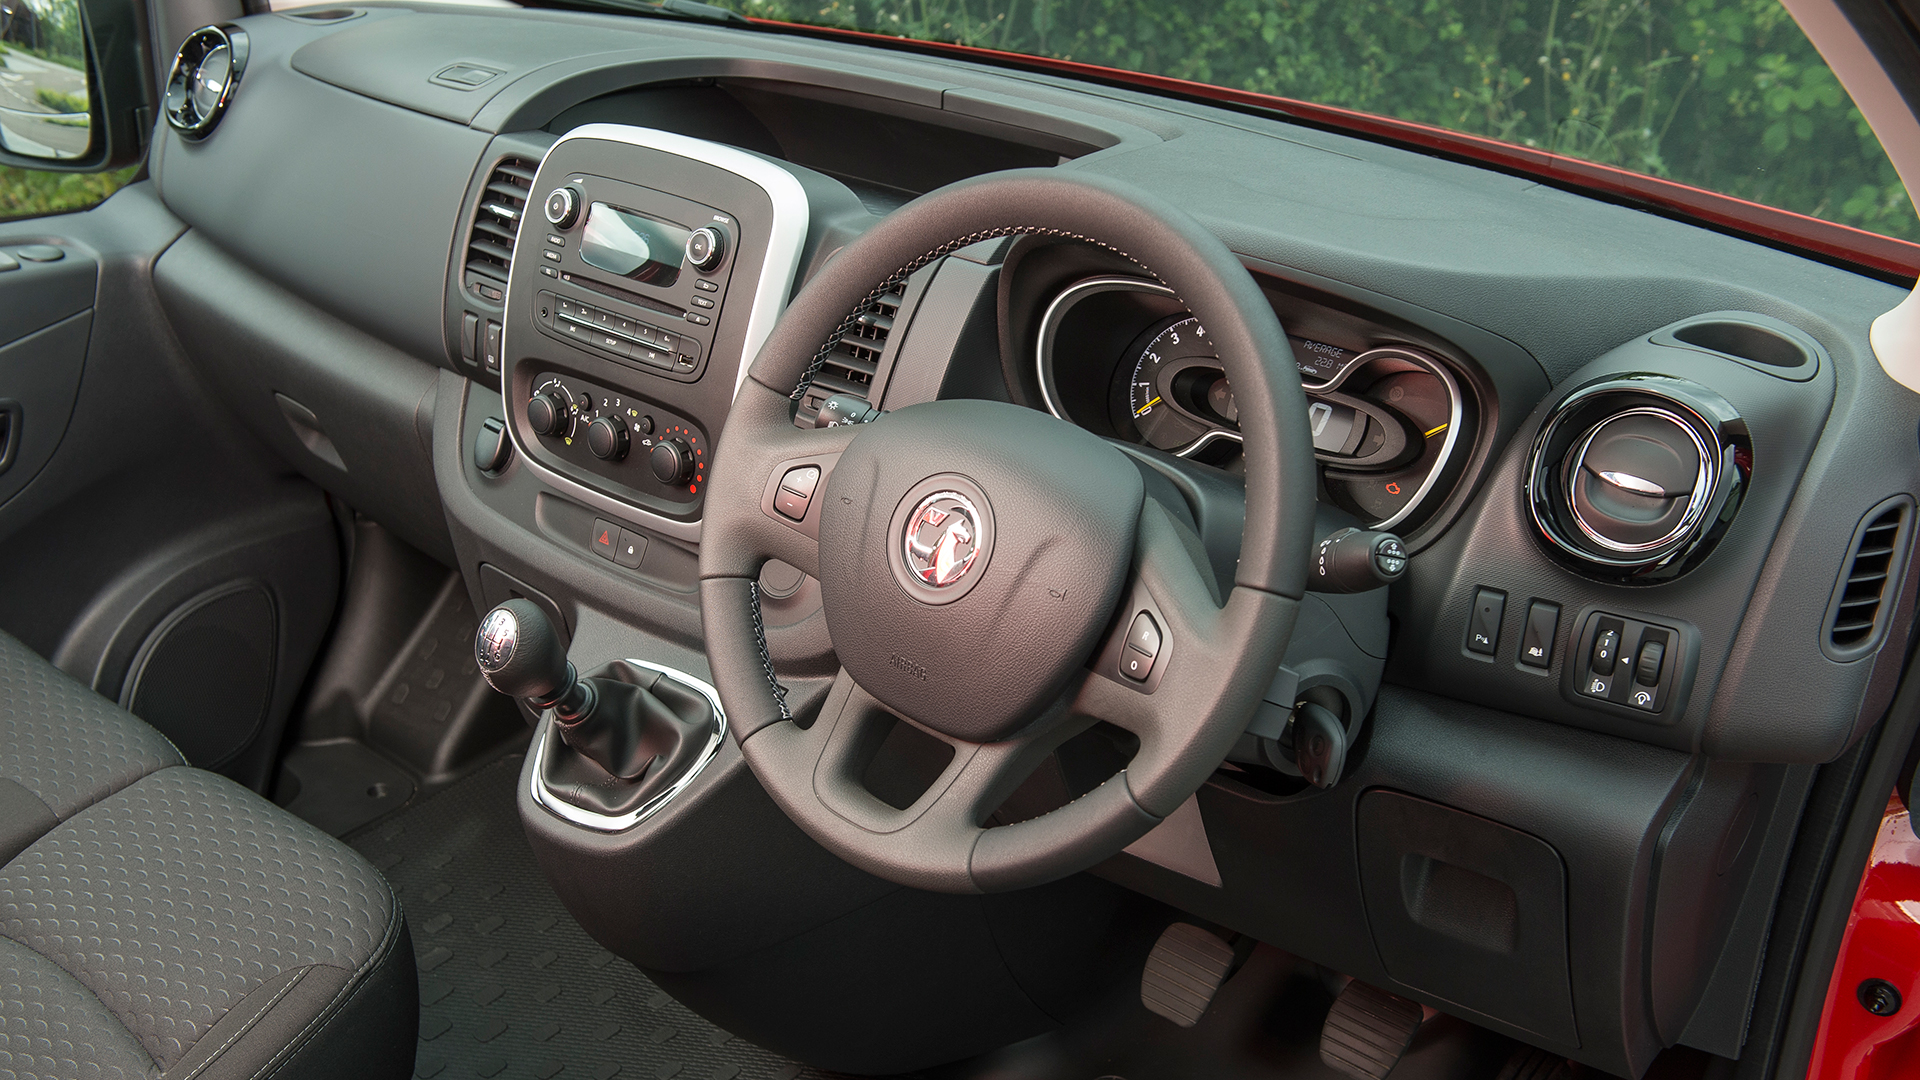 Vauxhall Vivaro Panel Van (2015 - ) review | AutoTrader